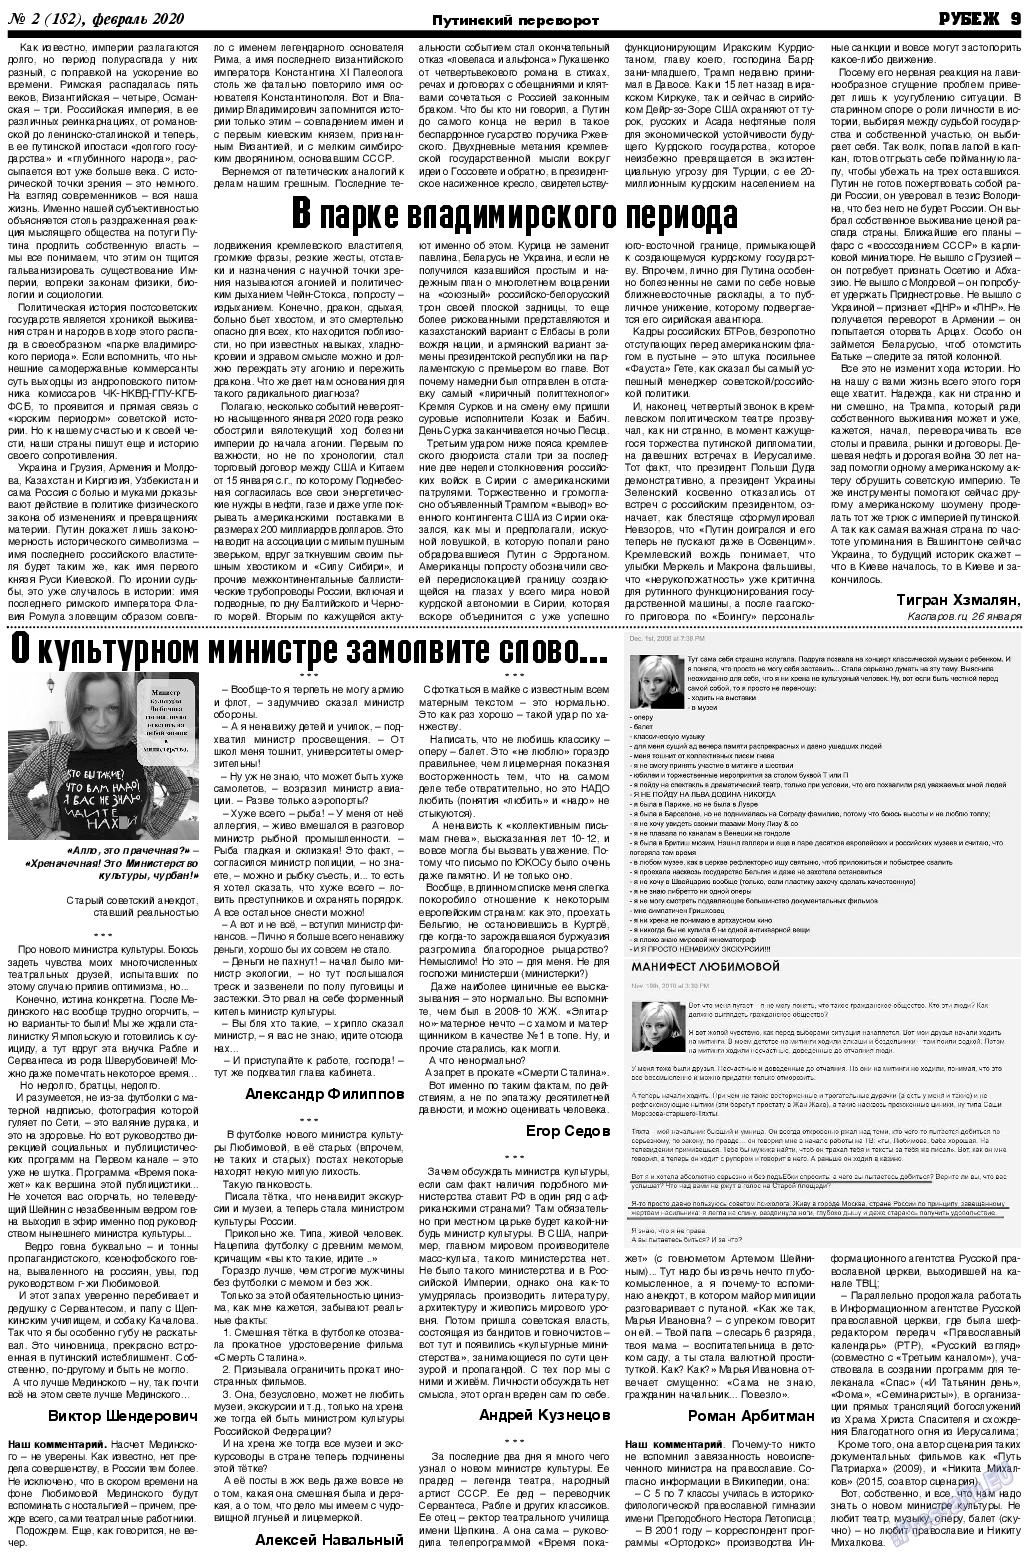 Рубеж, газета. 2020 №2 стр.9